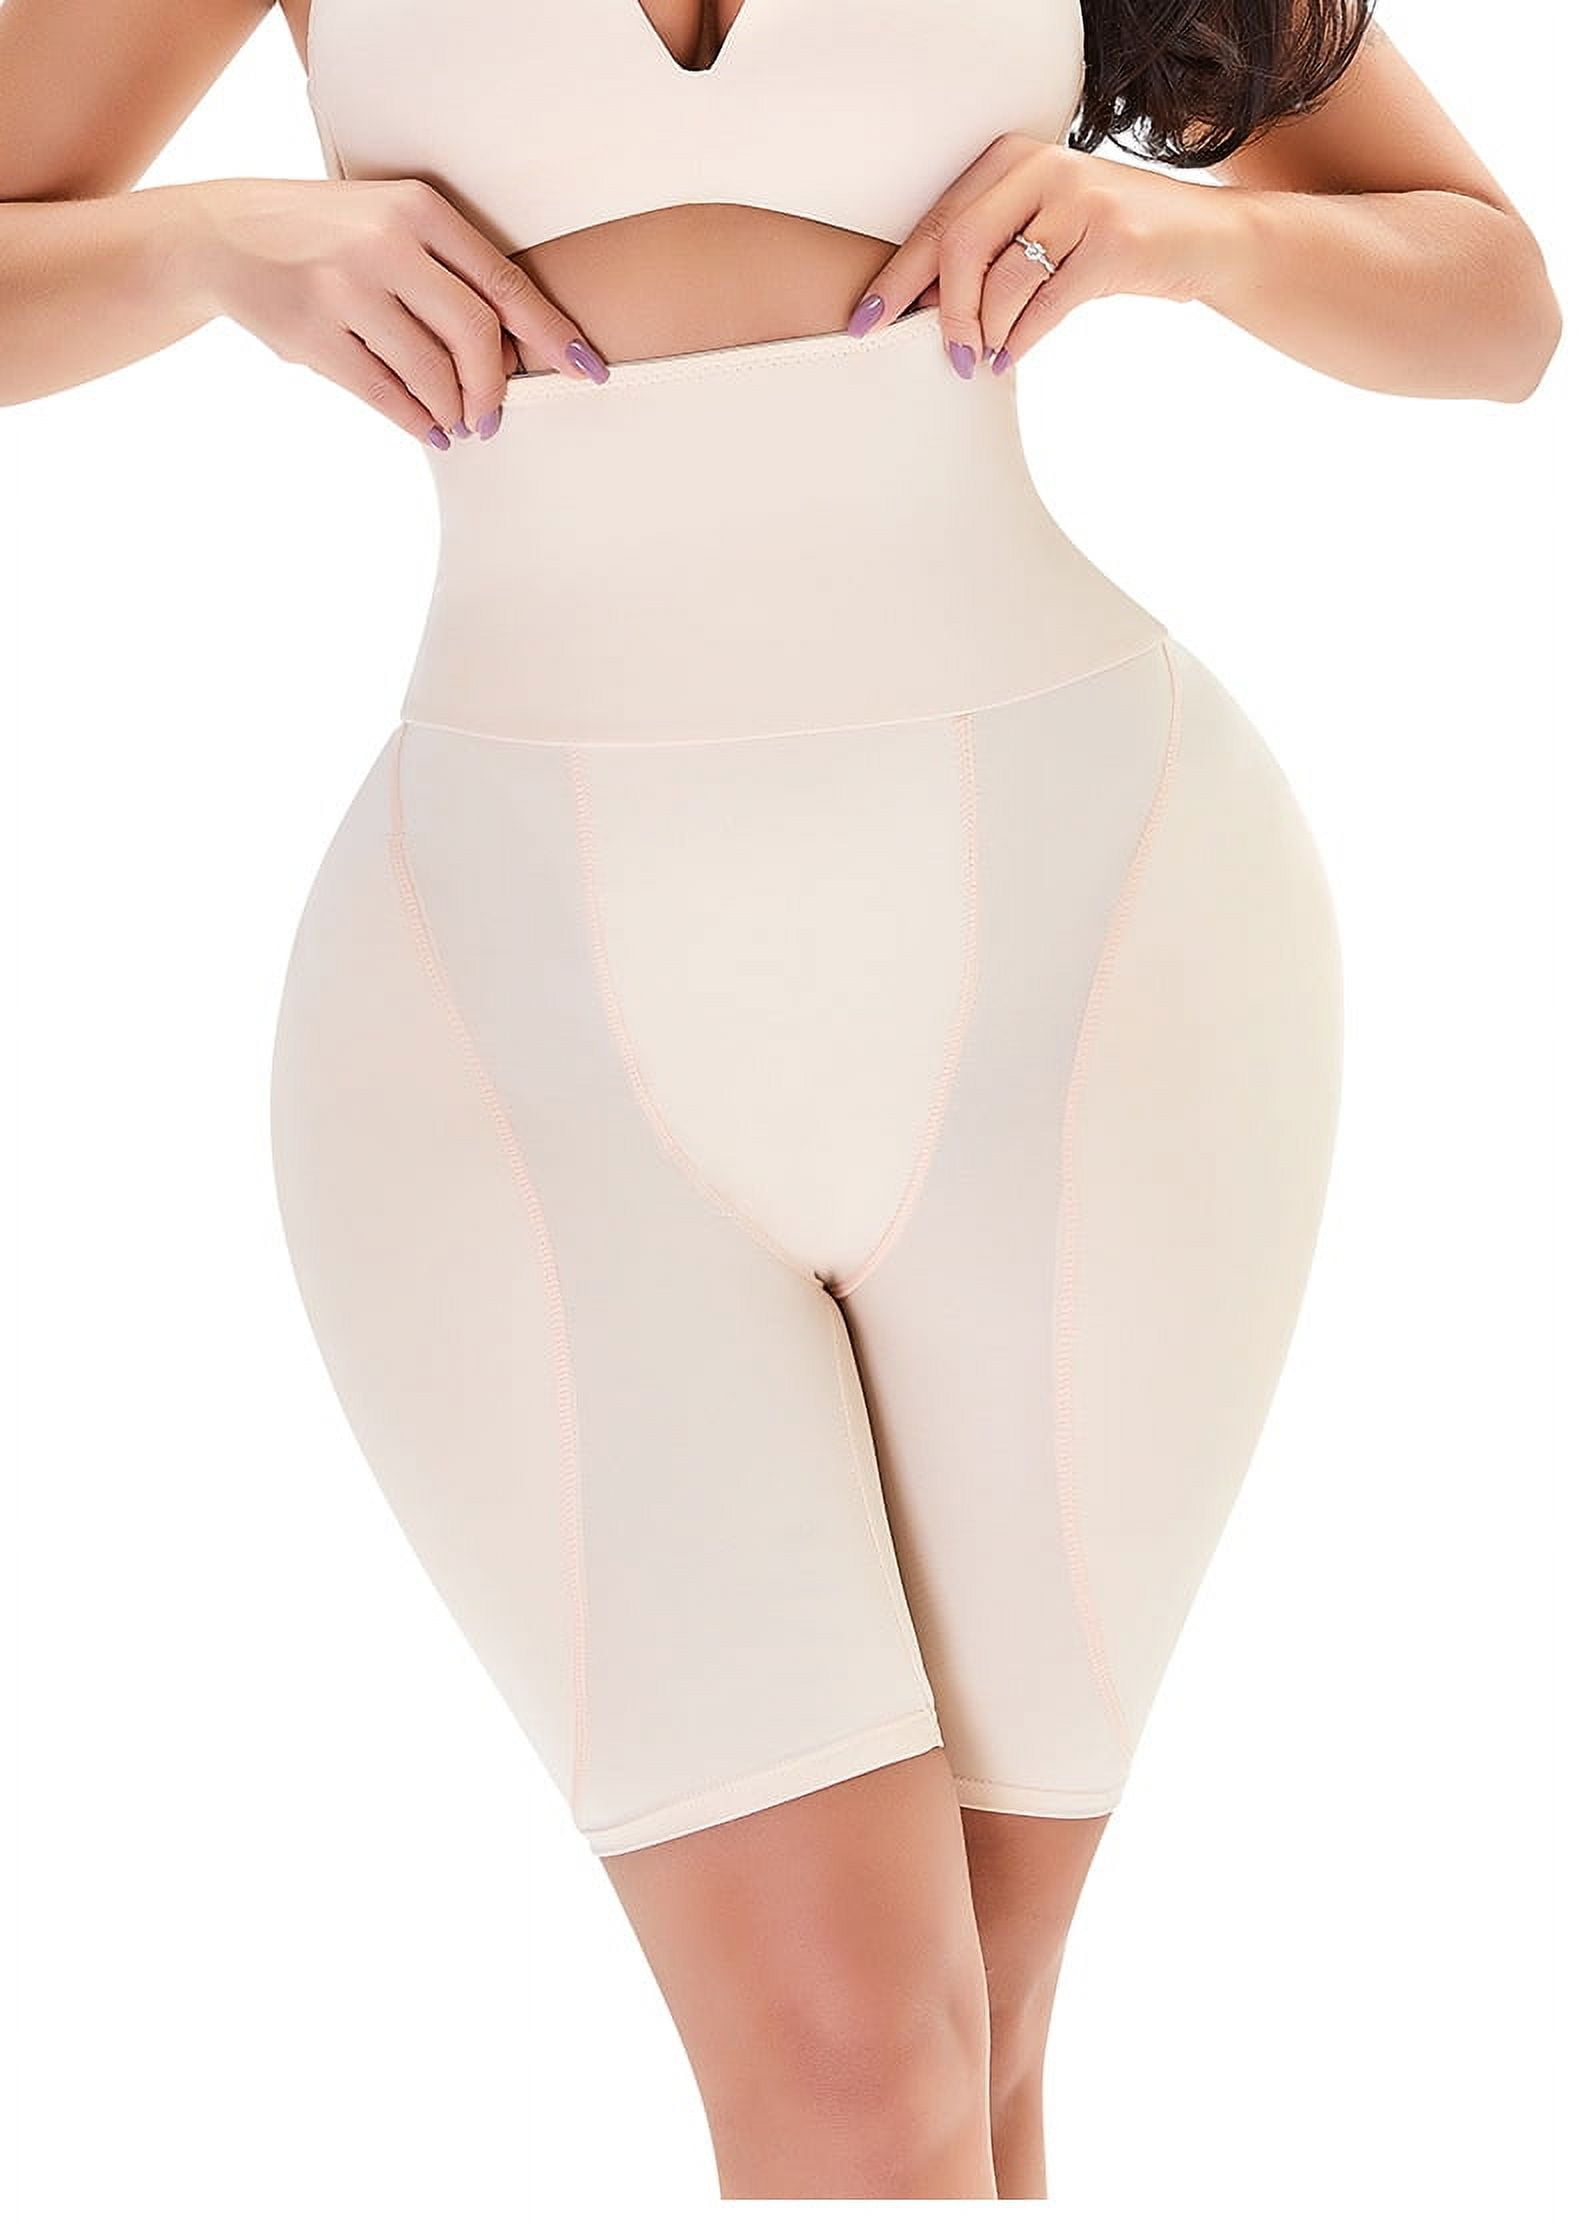 Zupora Seamless Bodysuit for Women Shapewear Tummy Control